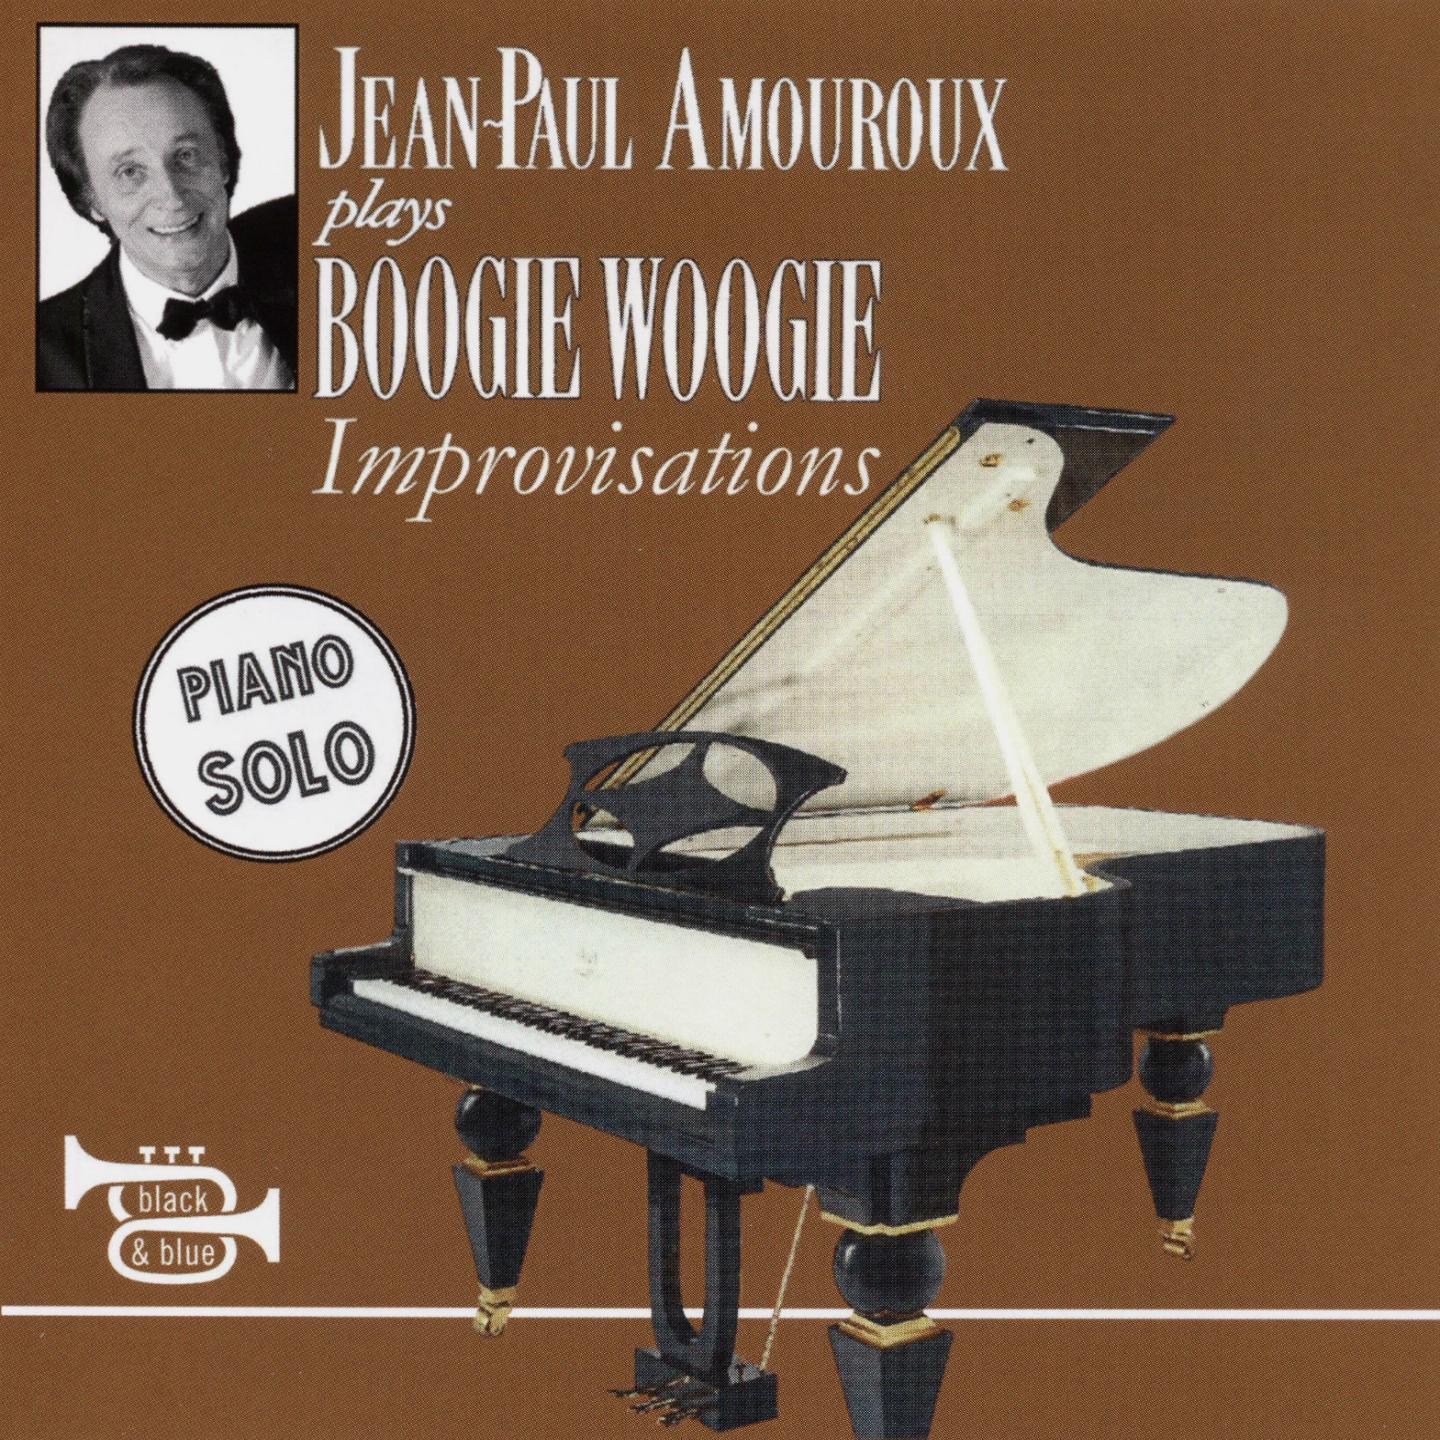 Boogie Woogie Improvisations (Piano Solo)